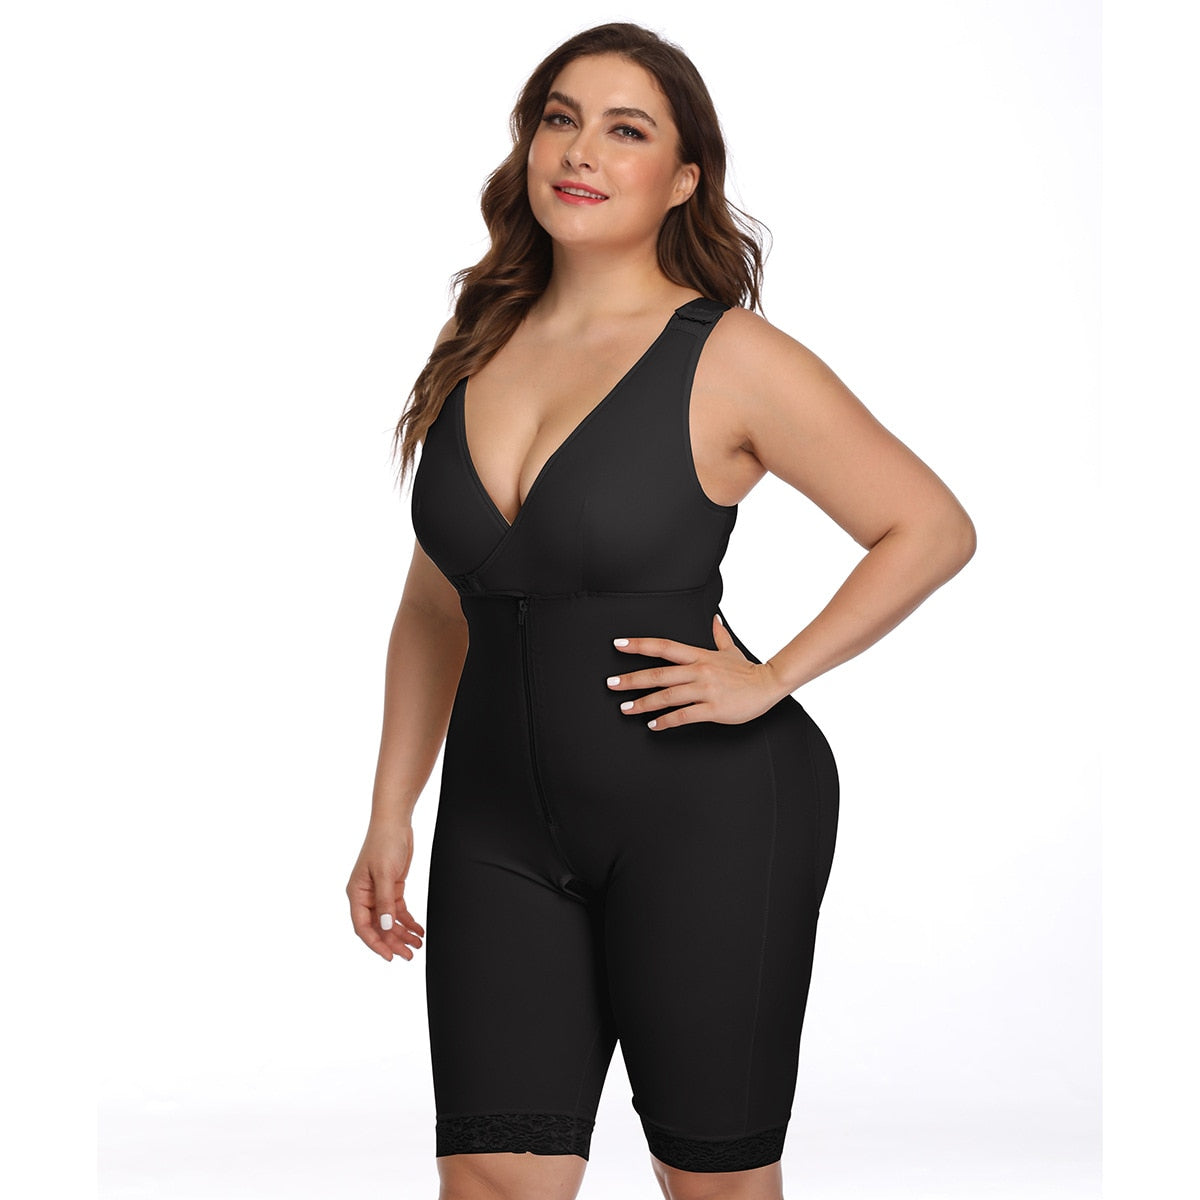 NEMOLEMON Plus Size Womens Body Shaper With Post Liposuction Girdle, Zip Up  Bodysuit Vest, Waist Reductoras Black Shapewear For A Natural Look From  Hairlove, $34.47